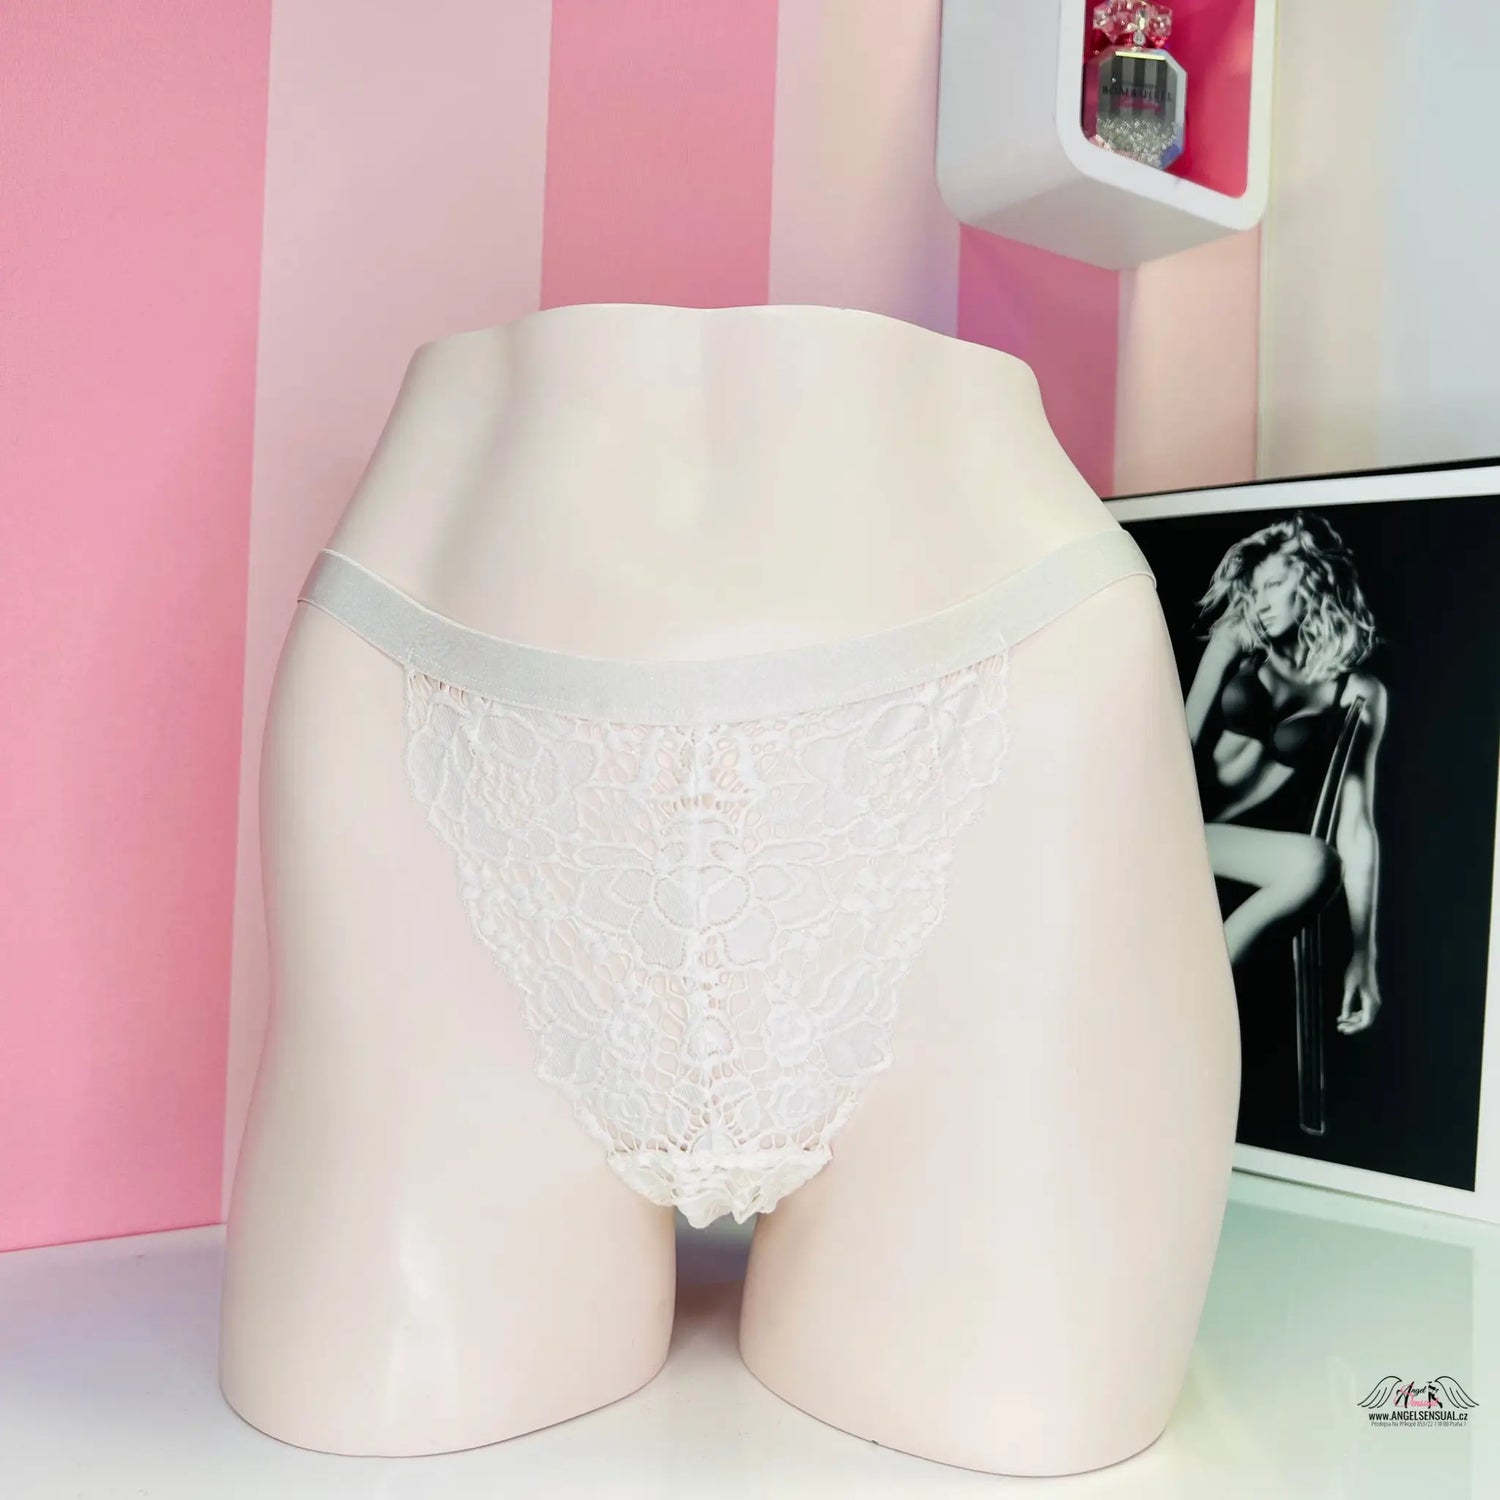 Krajkové kalhotky - M / Bílá / Nové se štítky - Kalhotky Victoria’s Secret